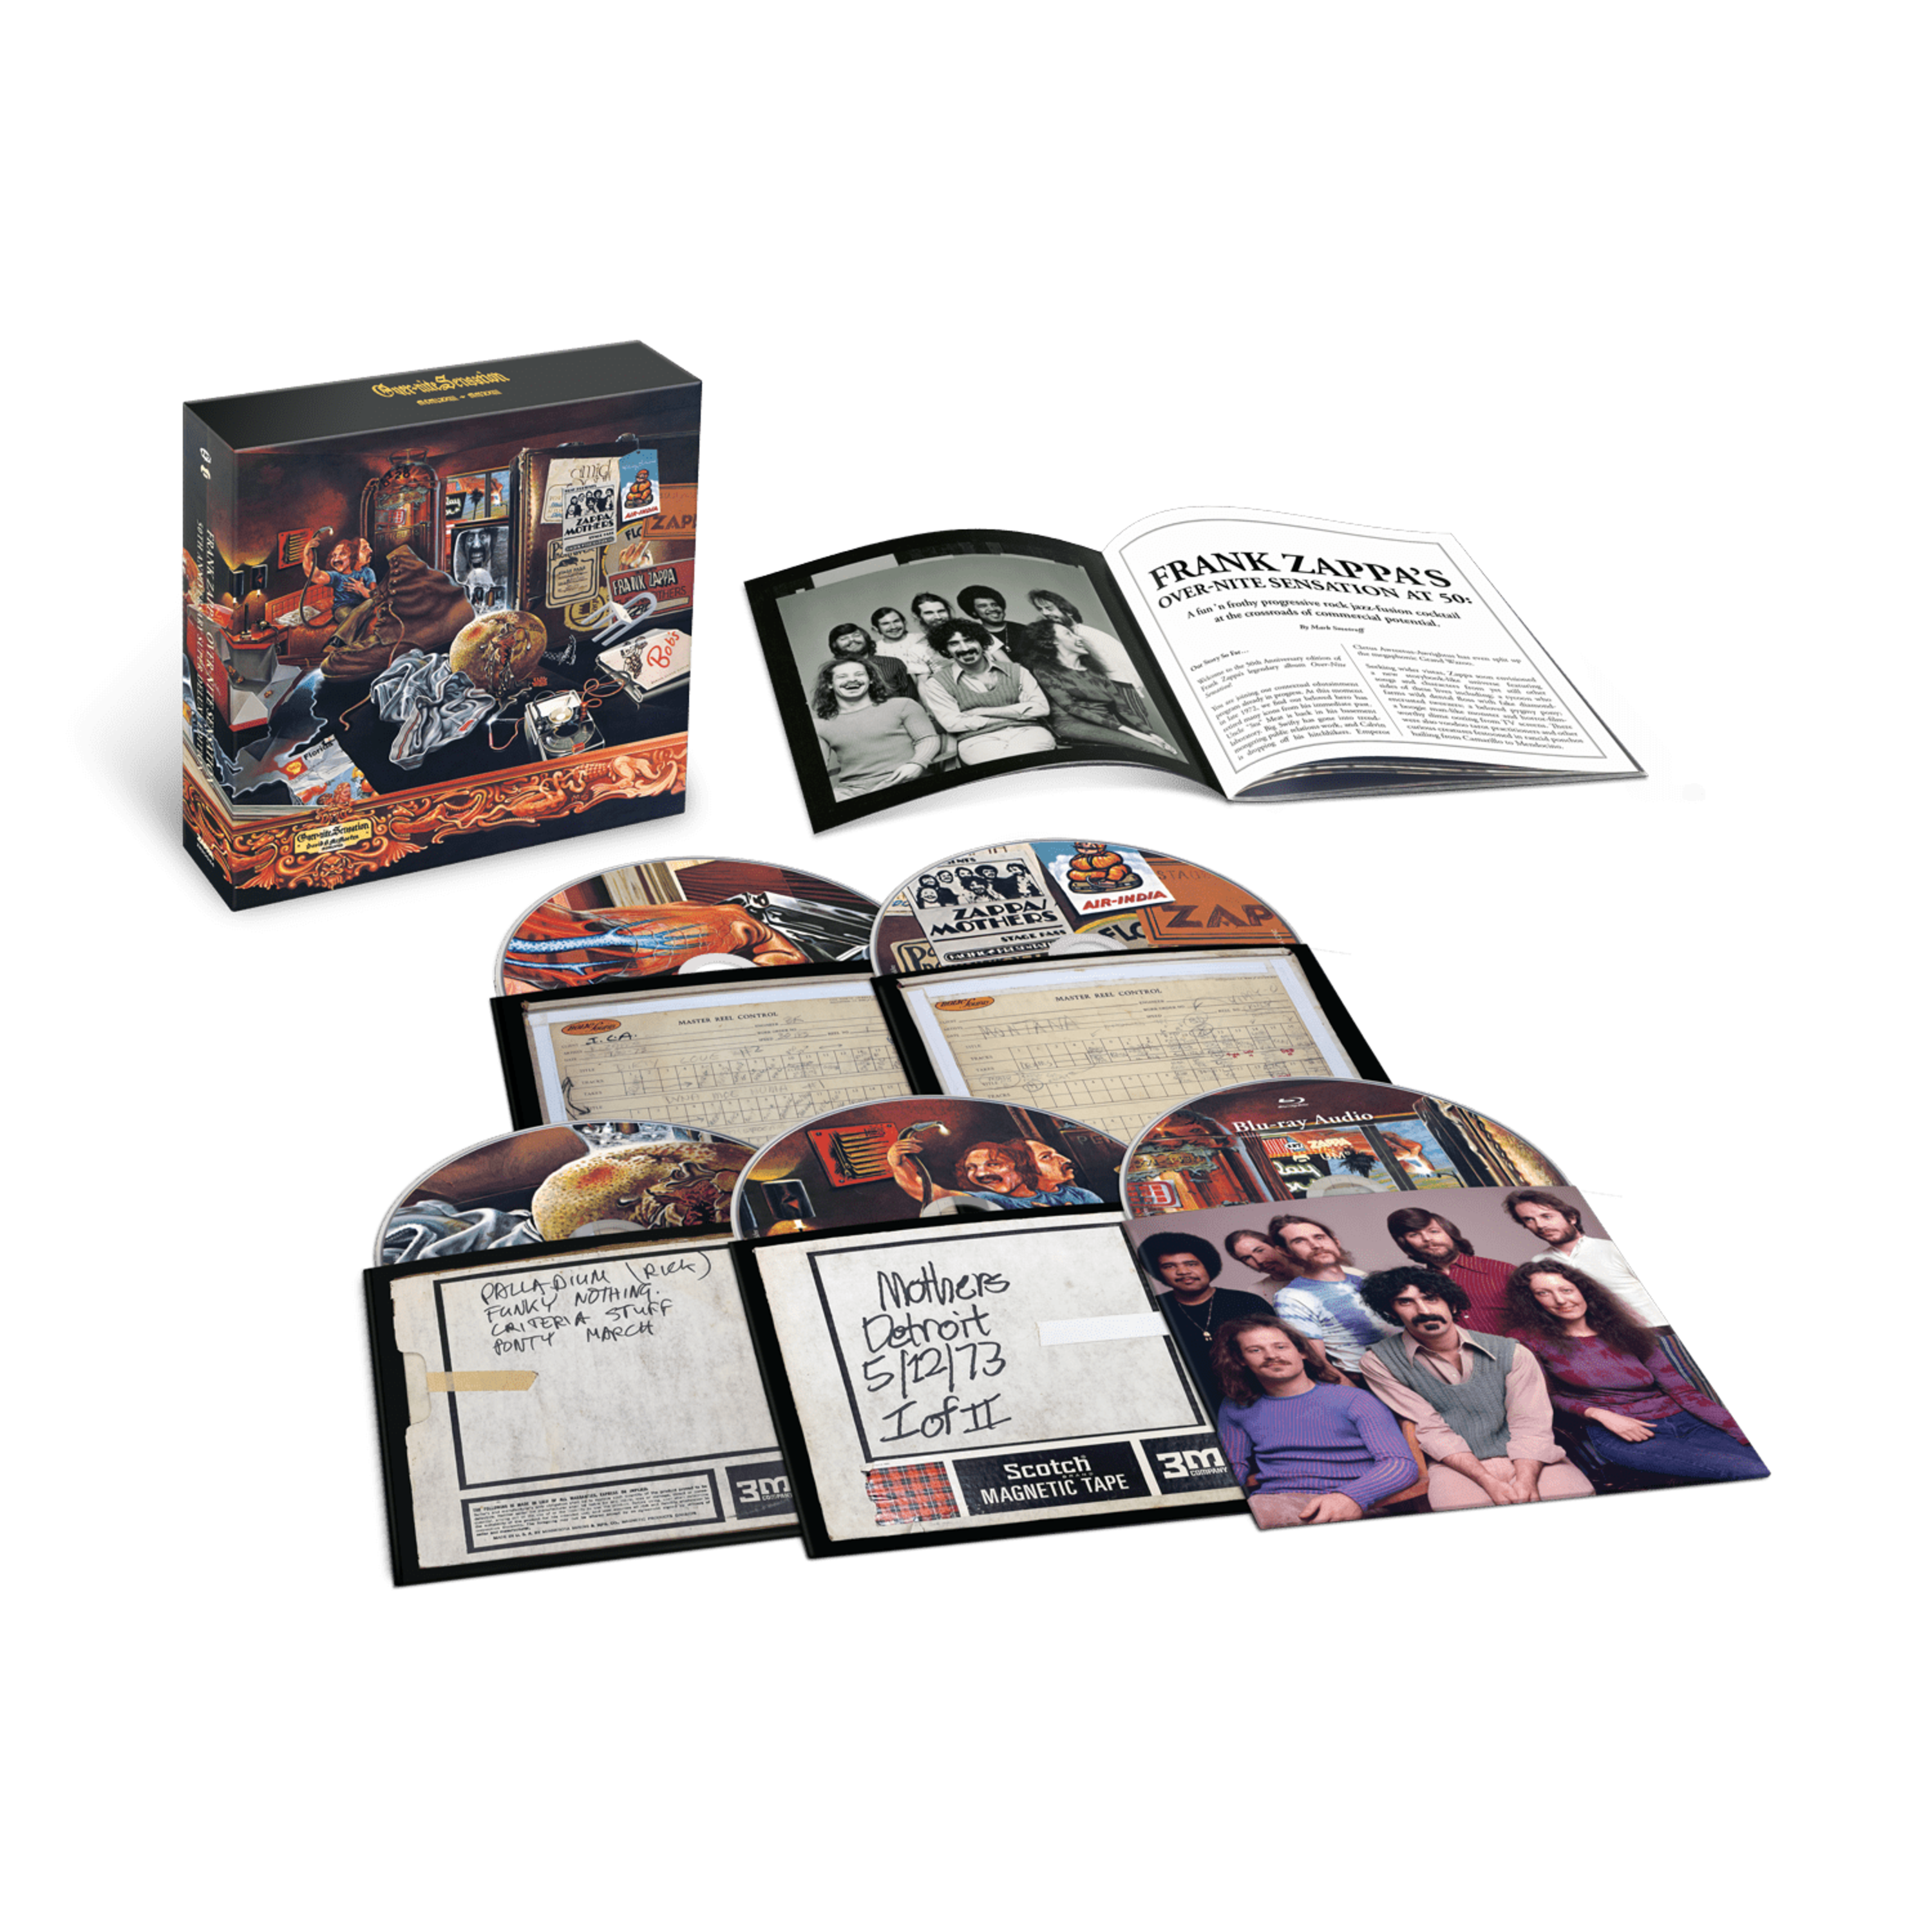 Frank-Zappa-Over-Nite-Sensation-50th-CD-Box-504596-398726.png